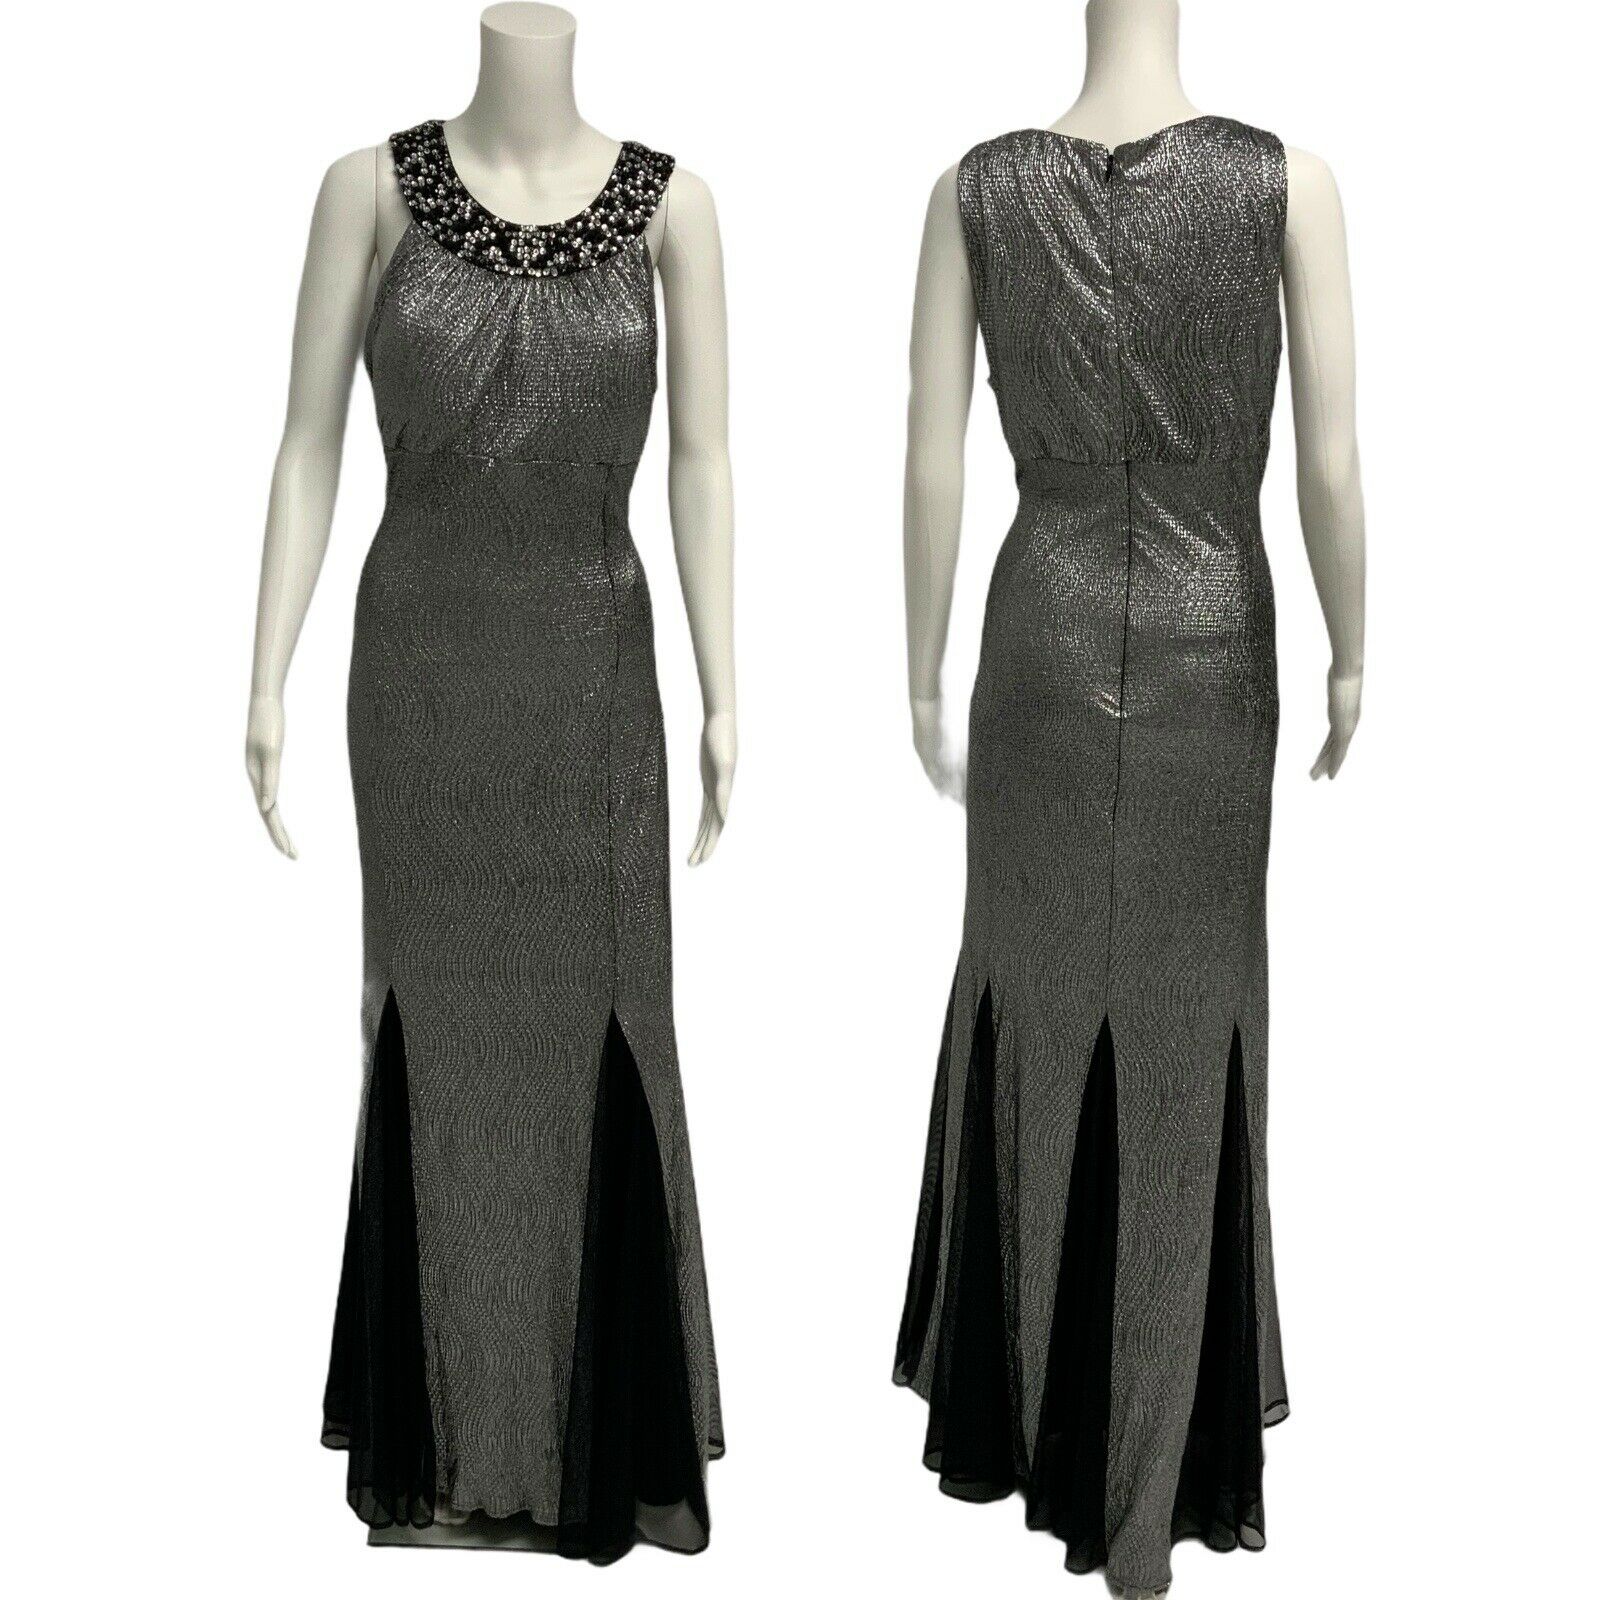 R&m Richard Women's Evening Formal Long Dress Gray Metallic Size 16